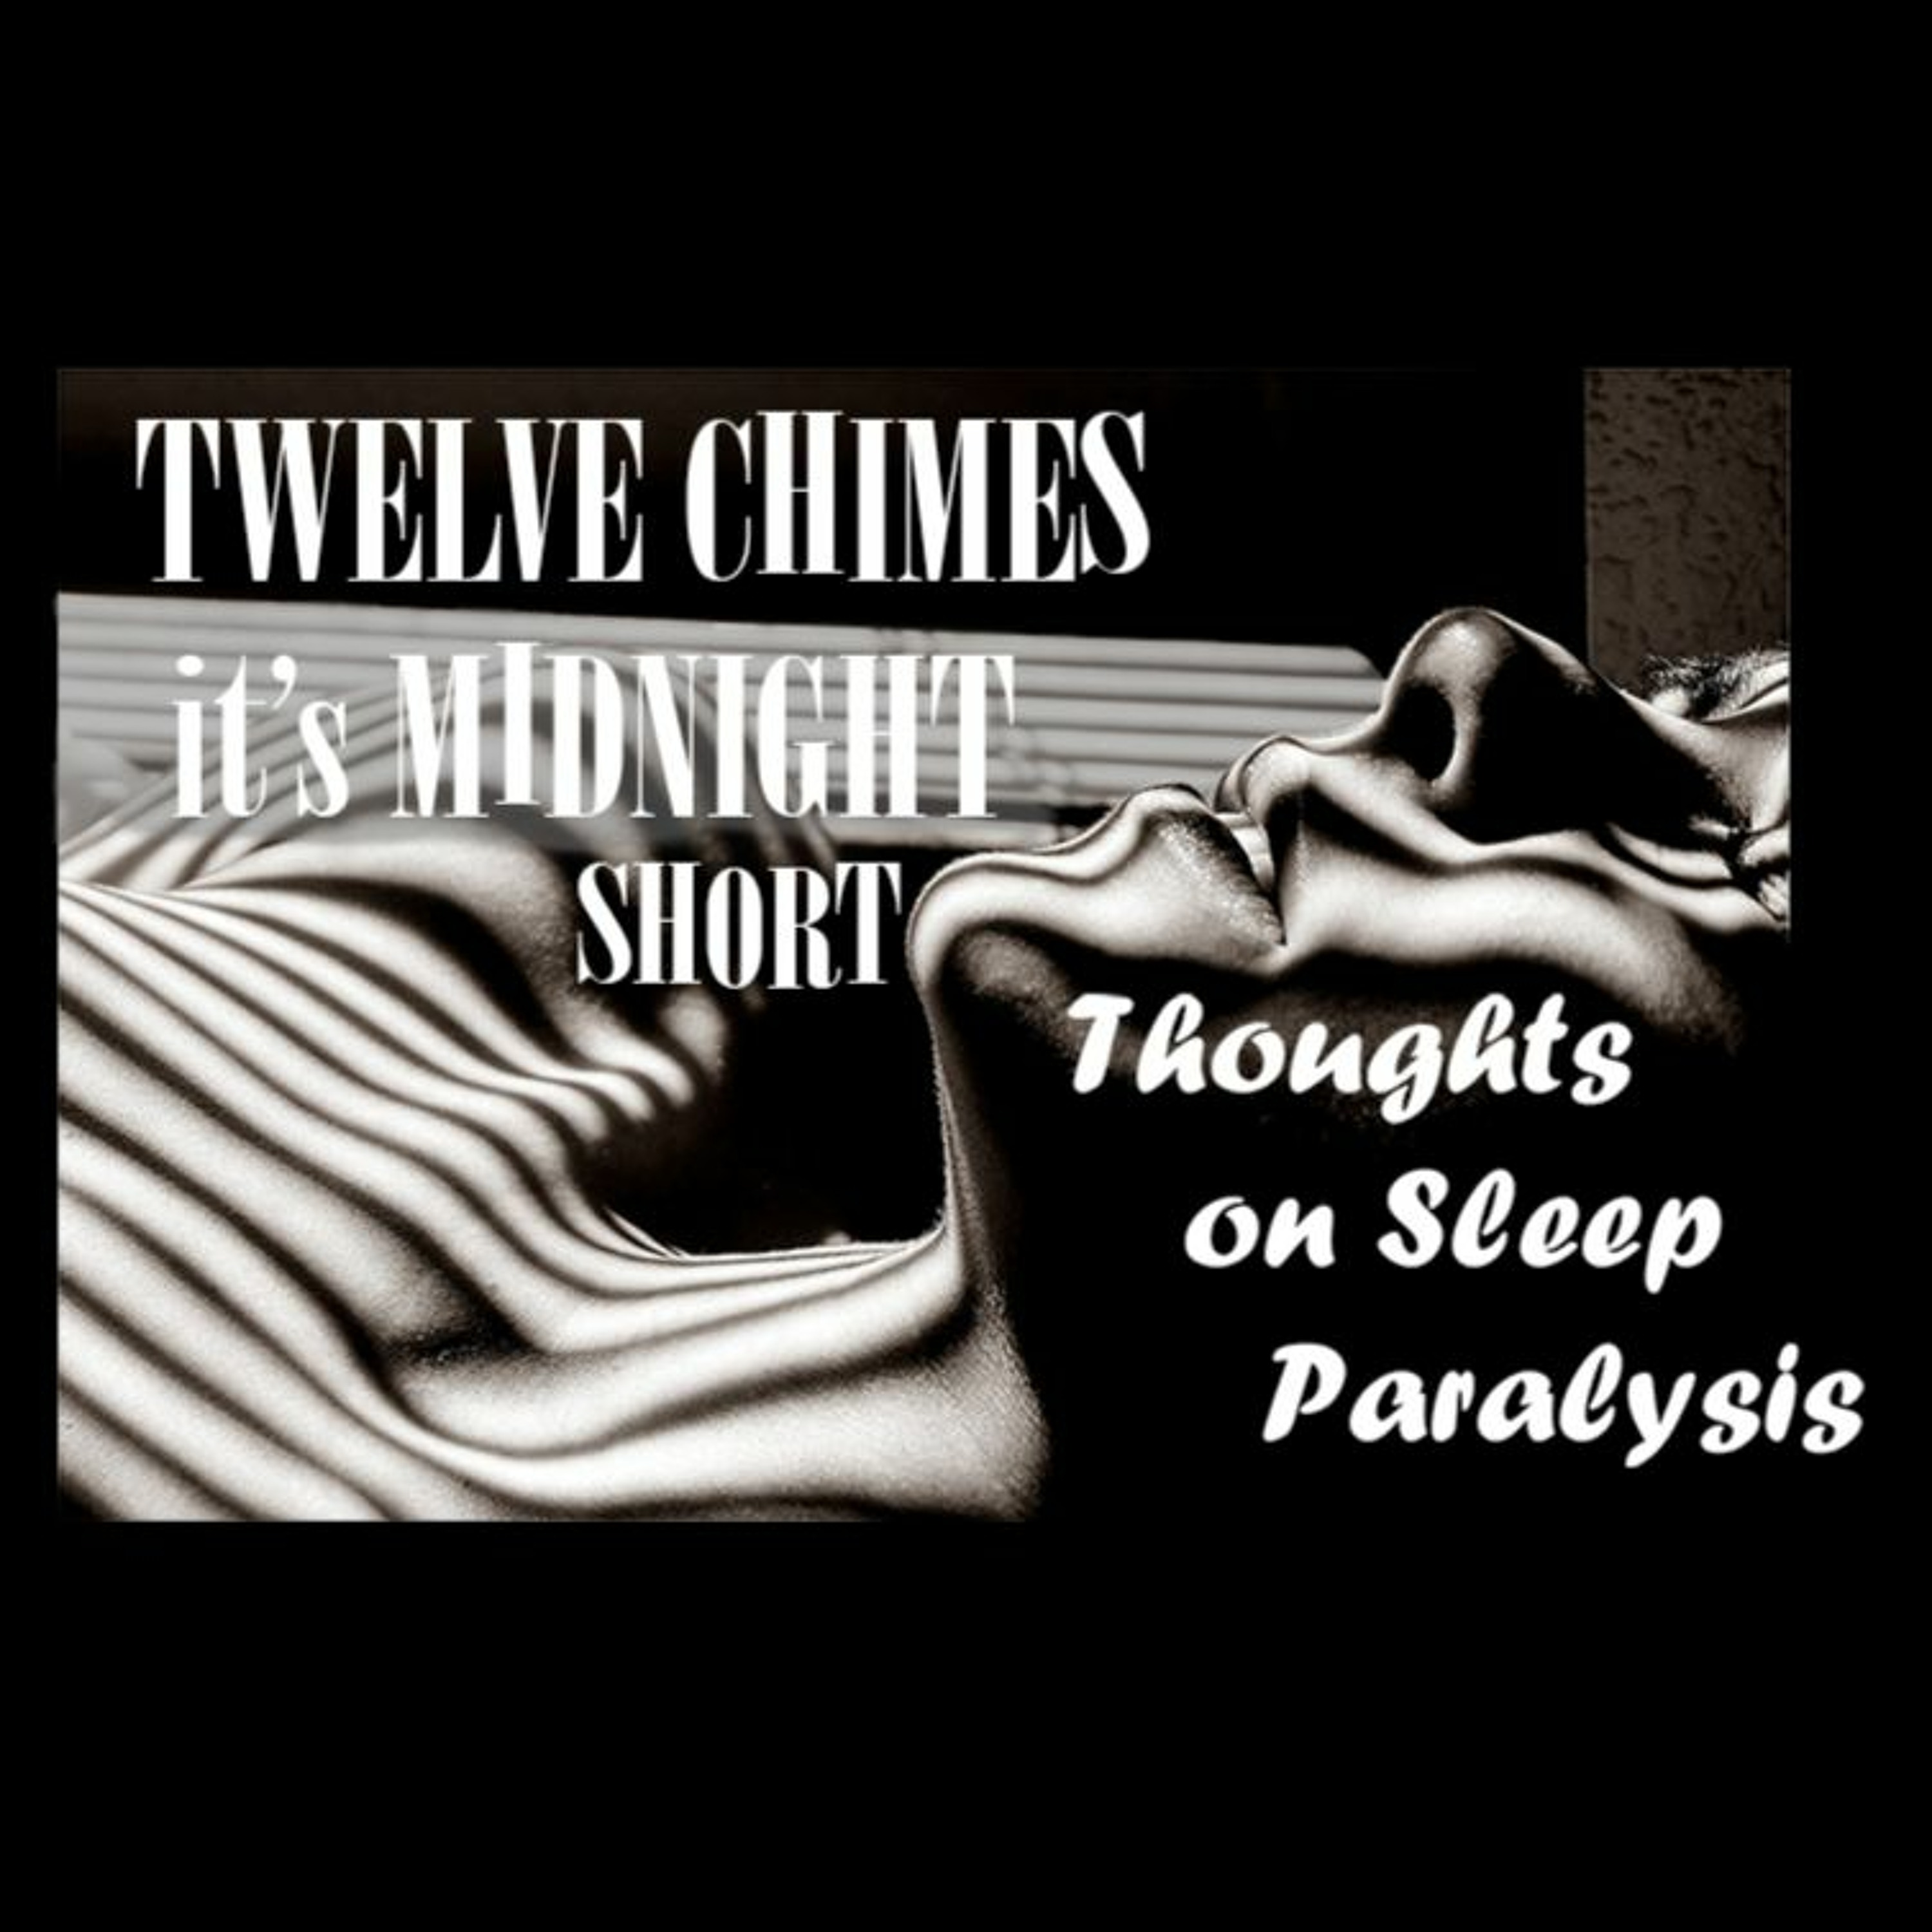 22 - Halloween and Thoughts on Sleep Paralysis